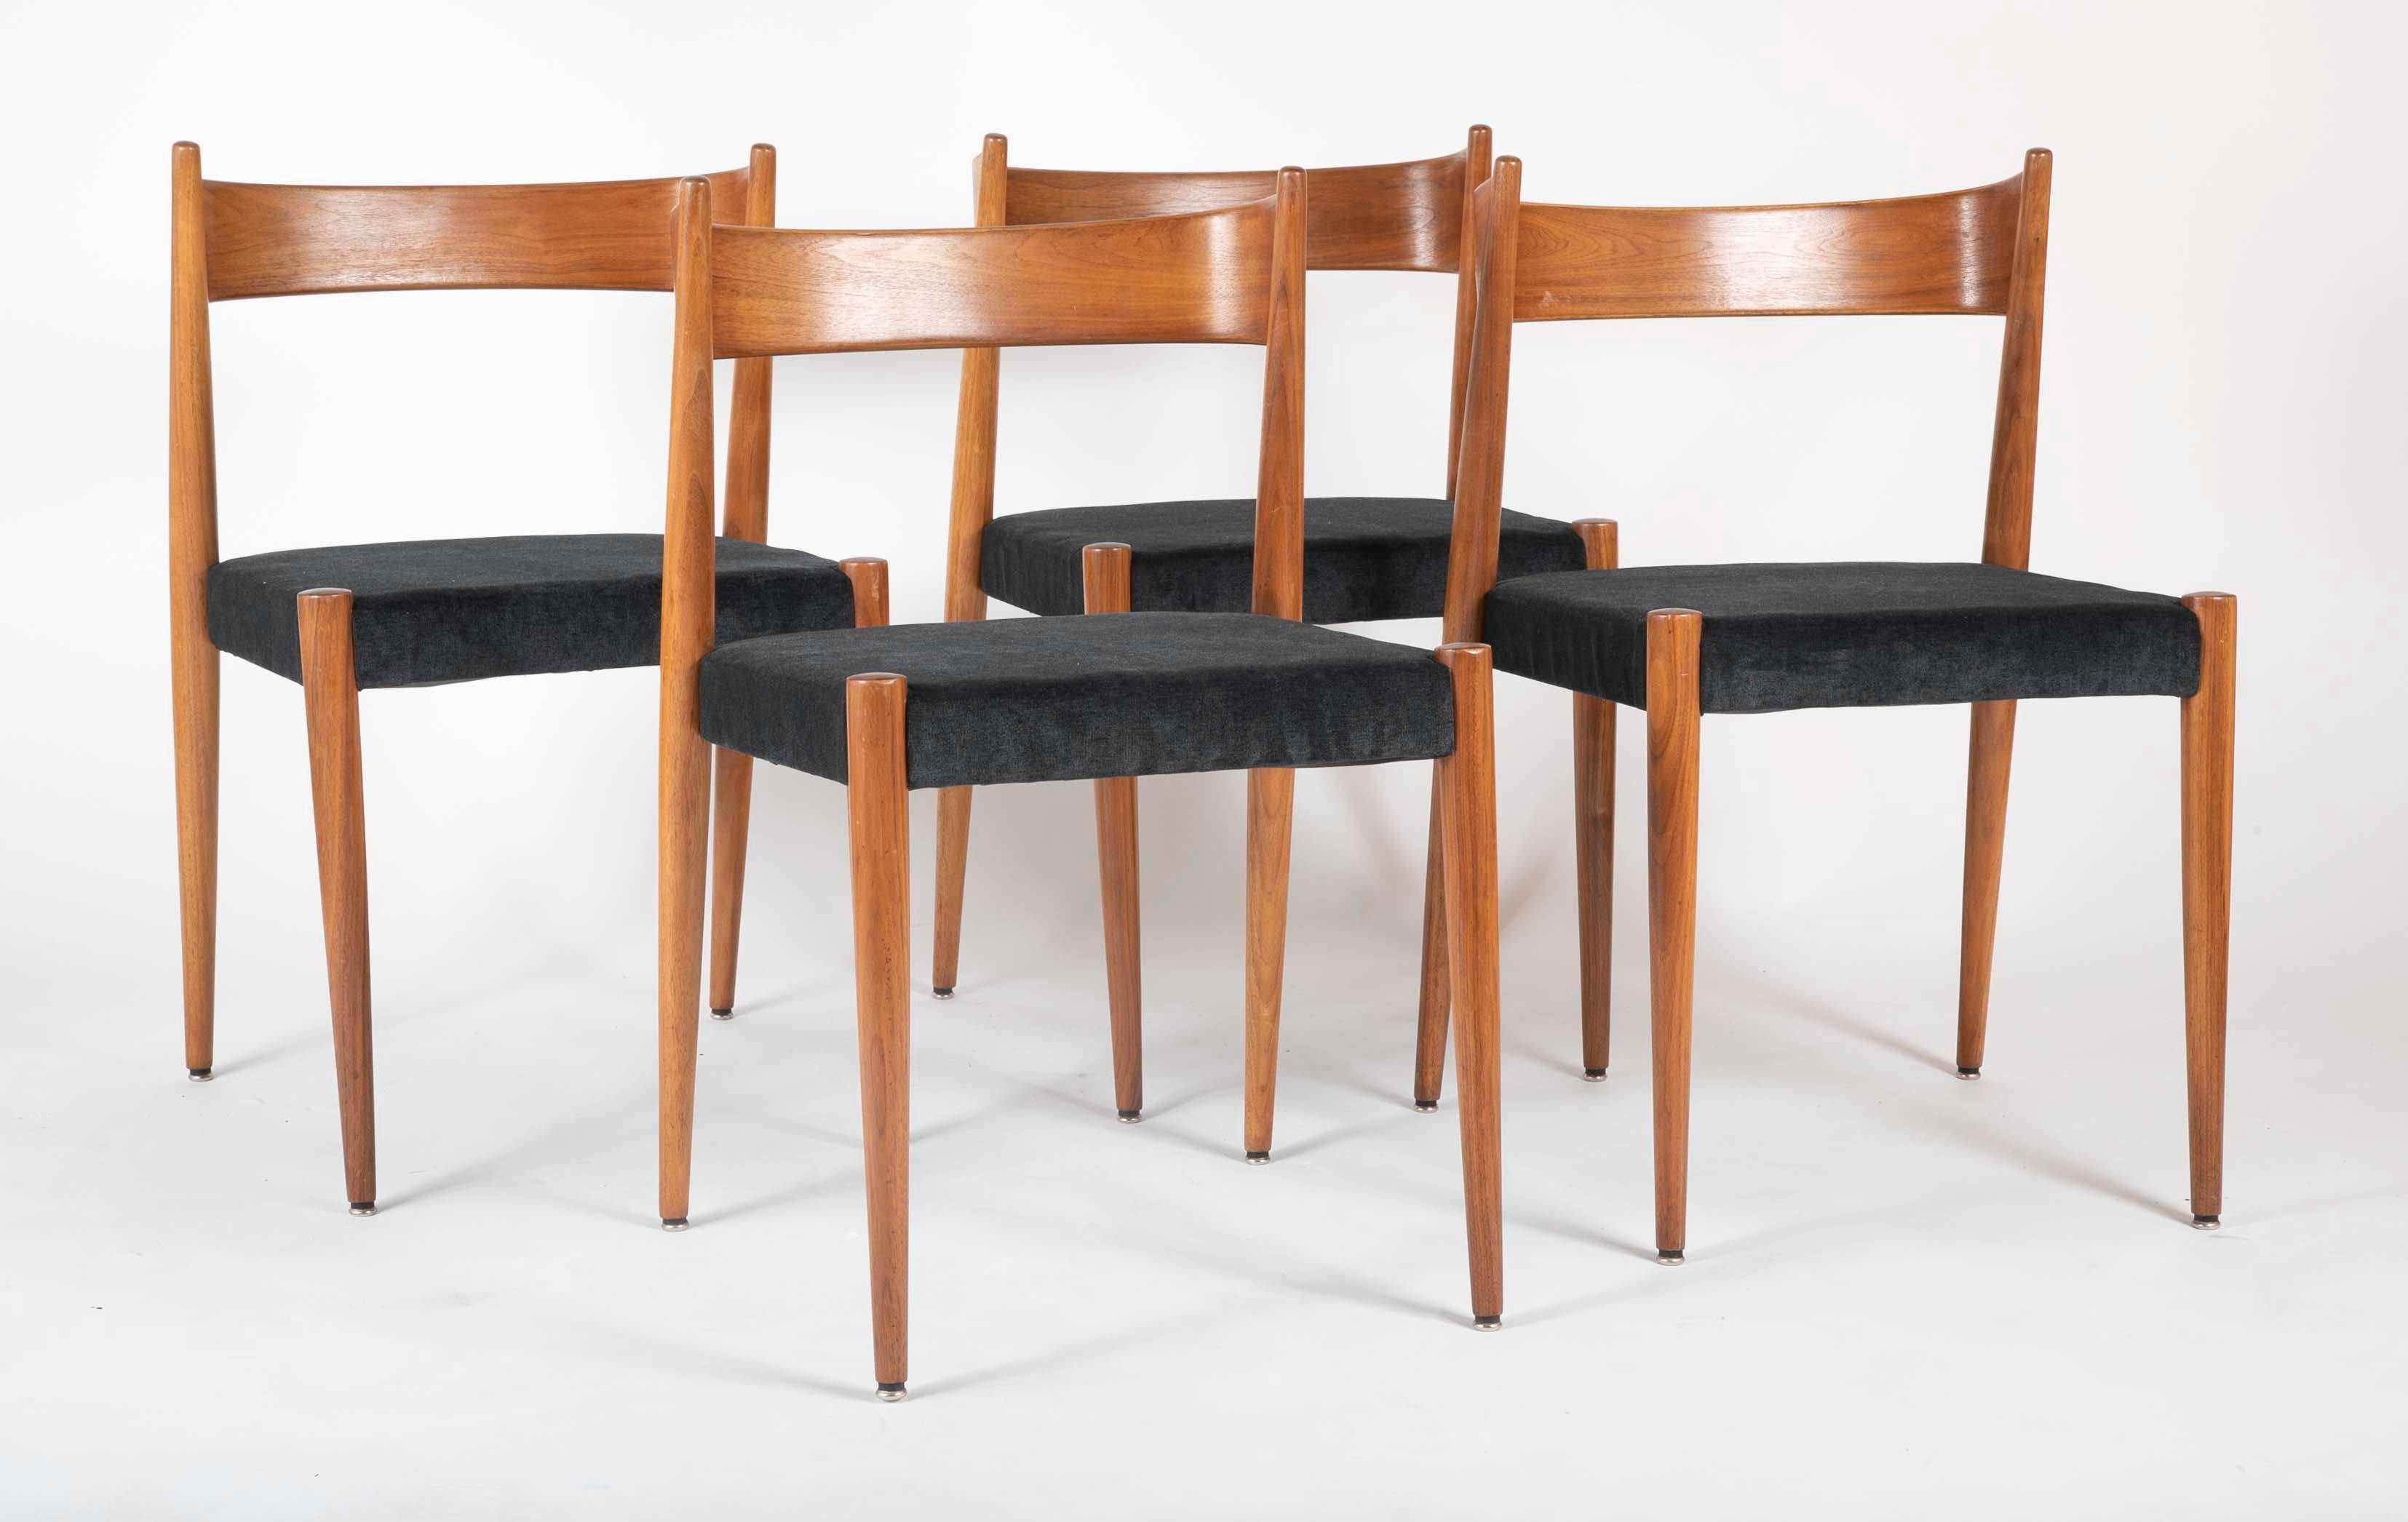 A wonderful set of four midcentury Danish teak chairs.